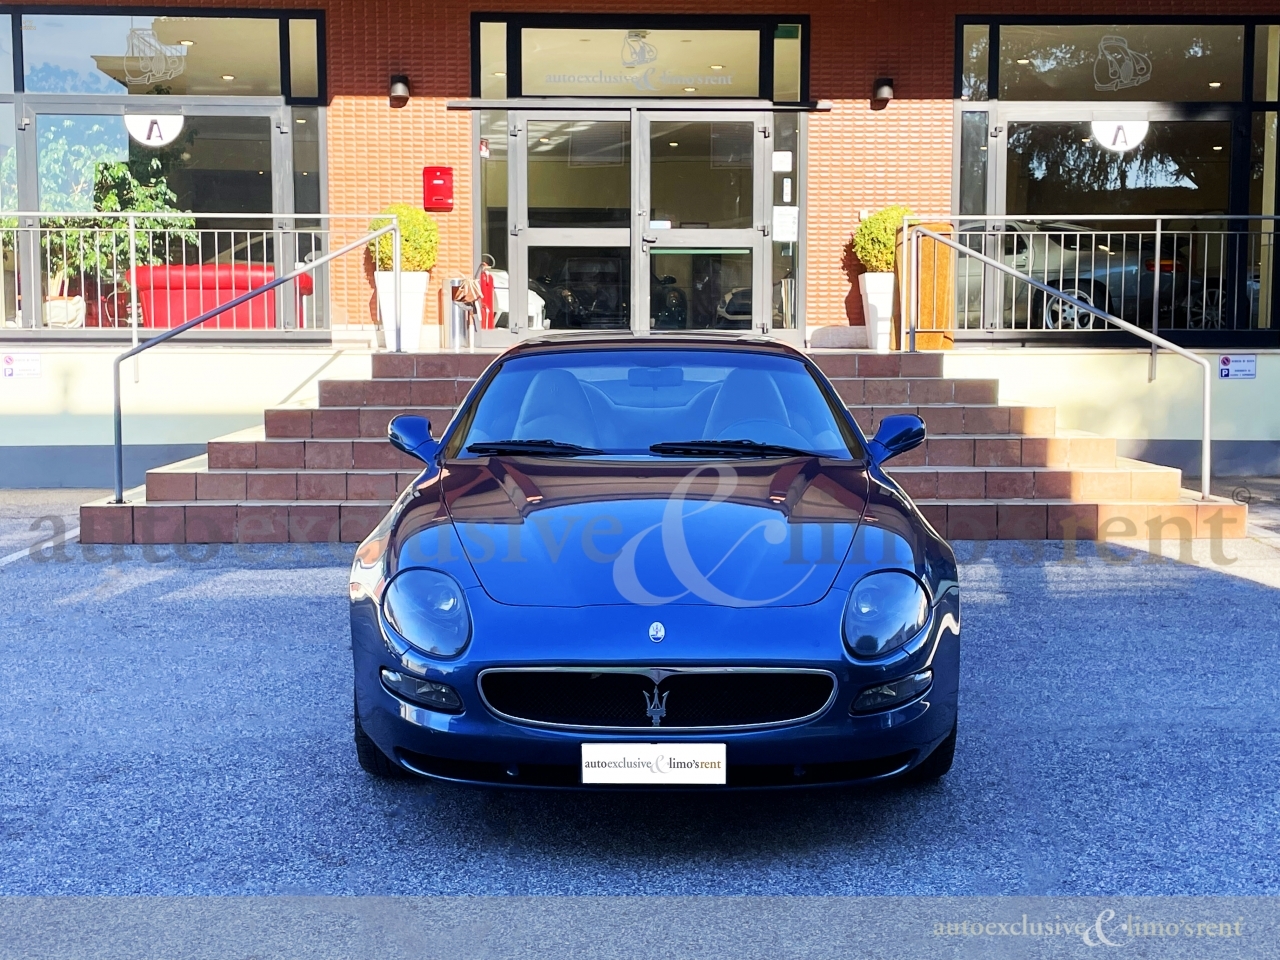 car-21933-Maserati_Coupe_42__V8_32V_Cambiocorsa-8-.jpg